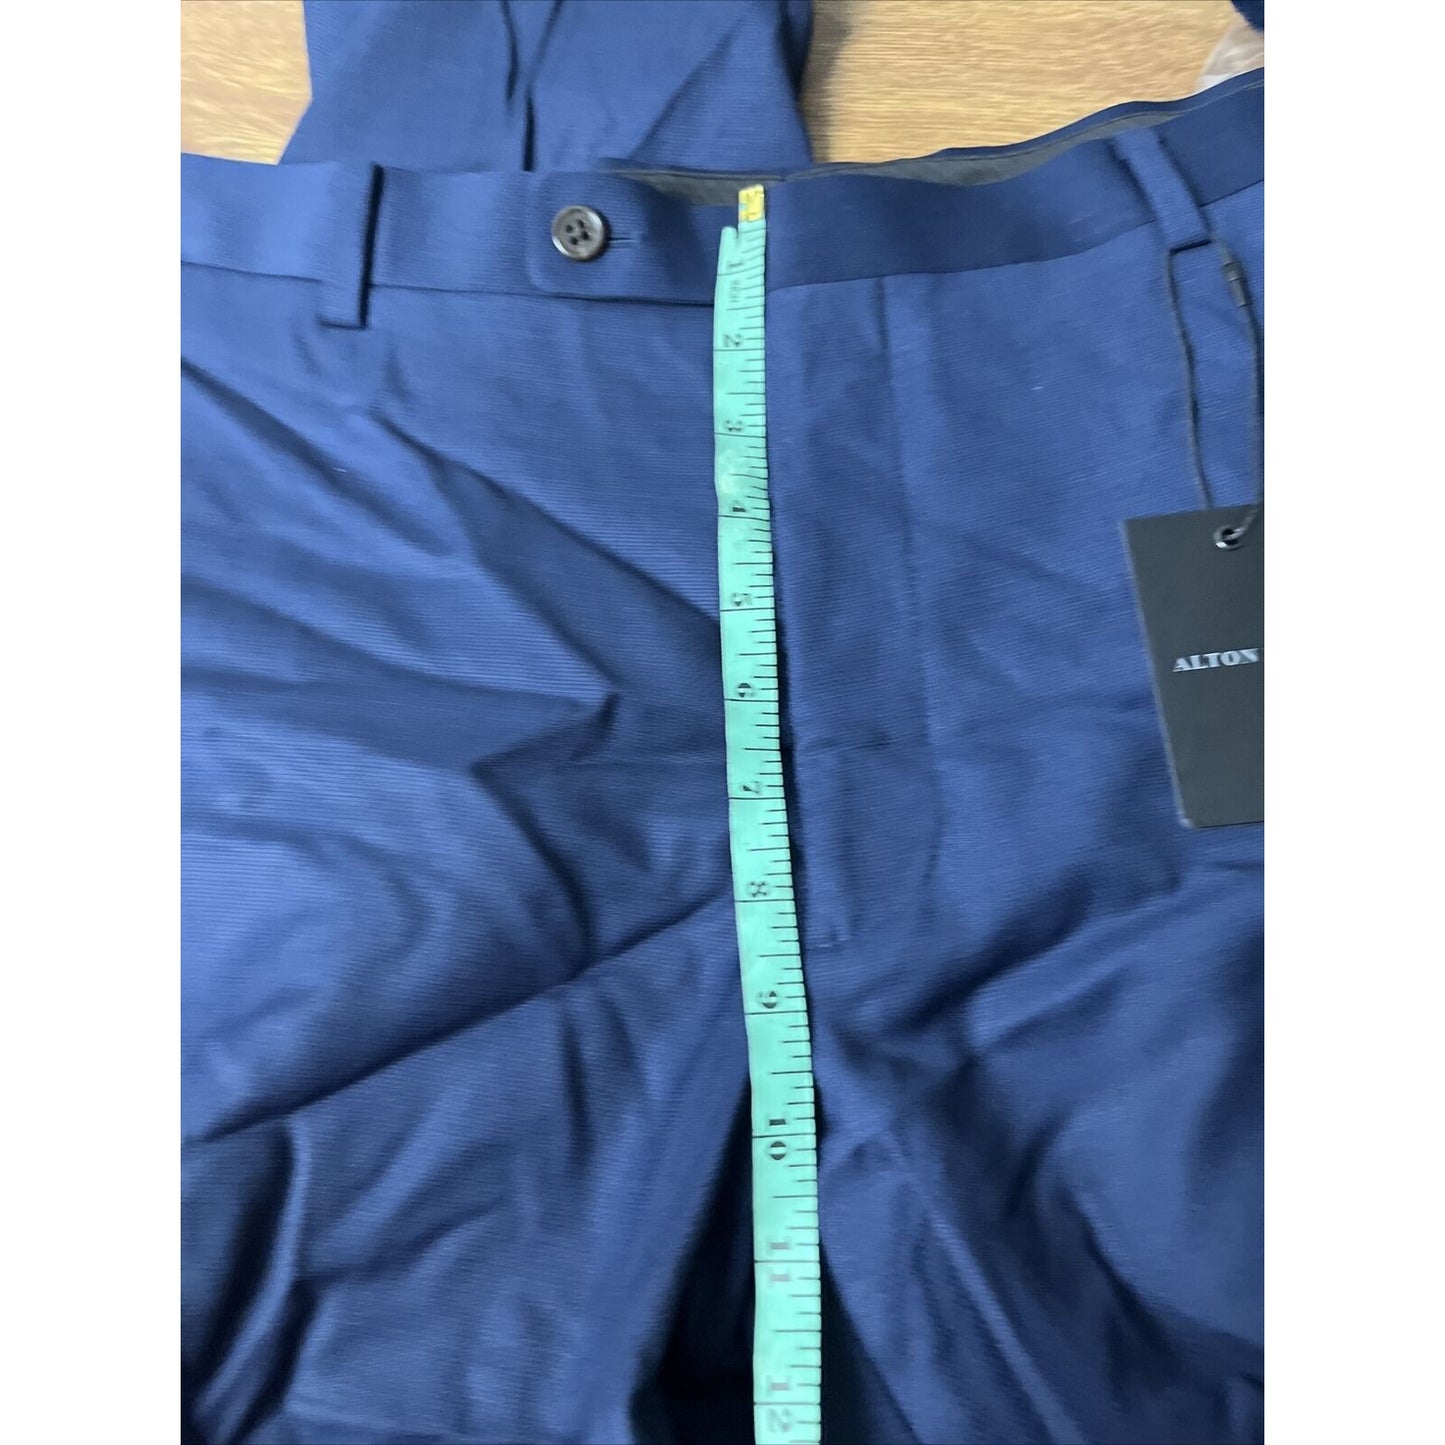 NEW Alton Lane Men's Medium Blue Tailored Fit Mercantile Chino Pants - 36 Size